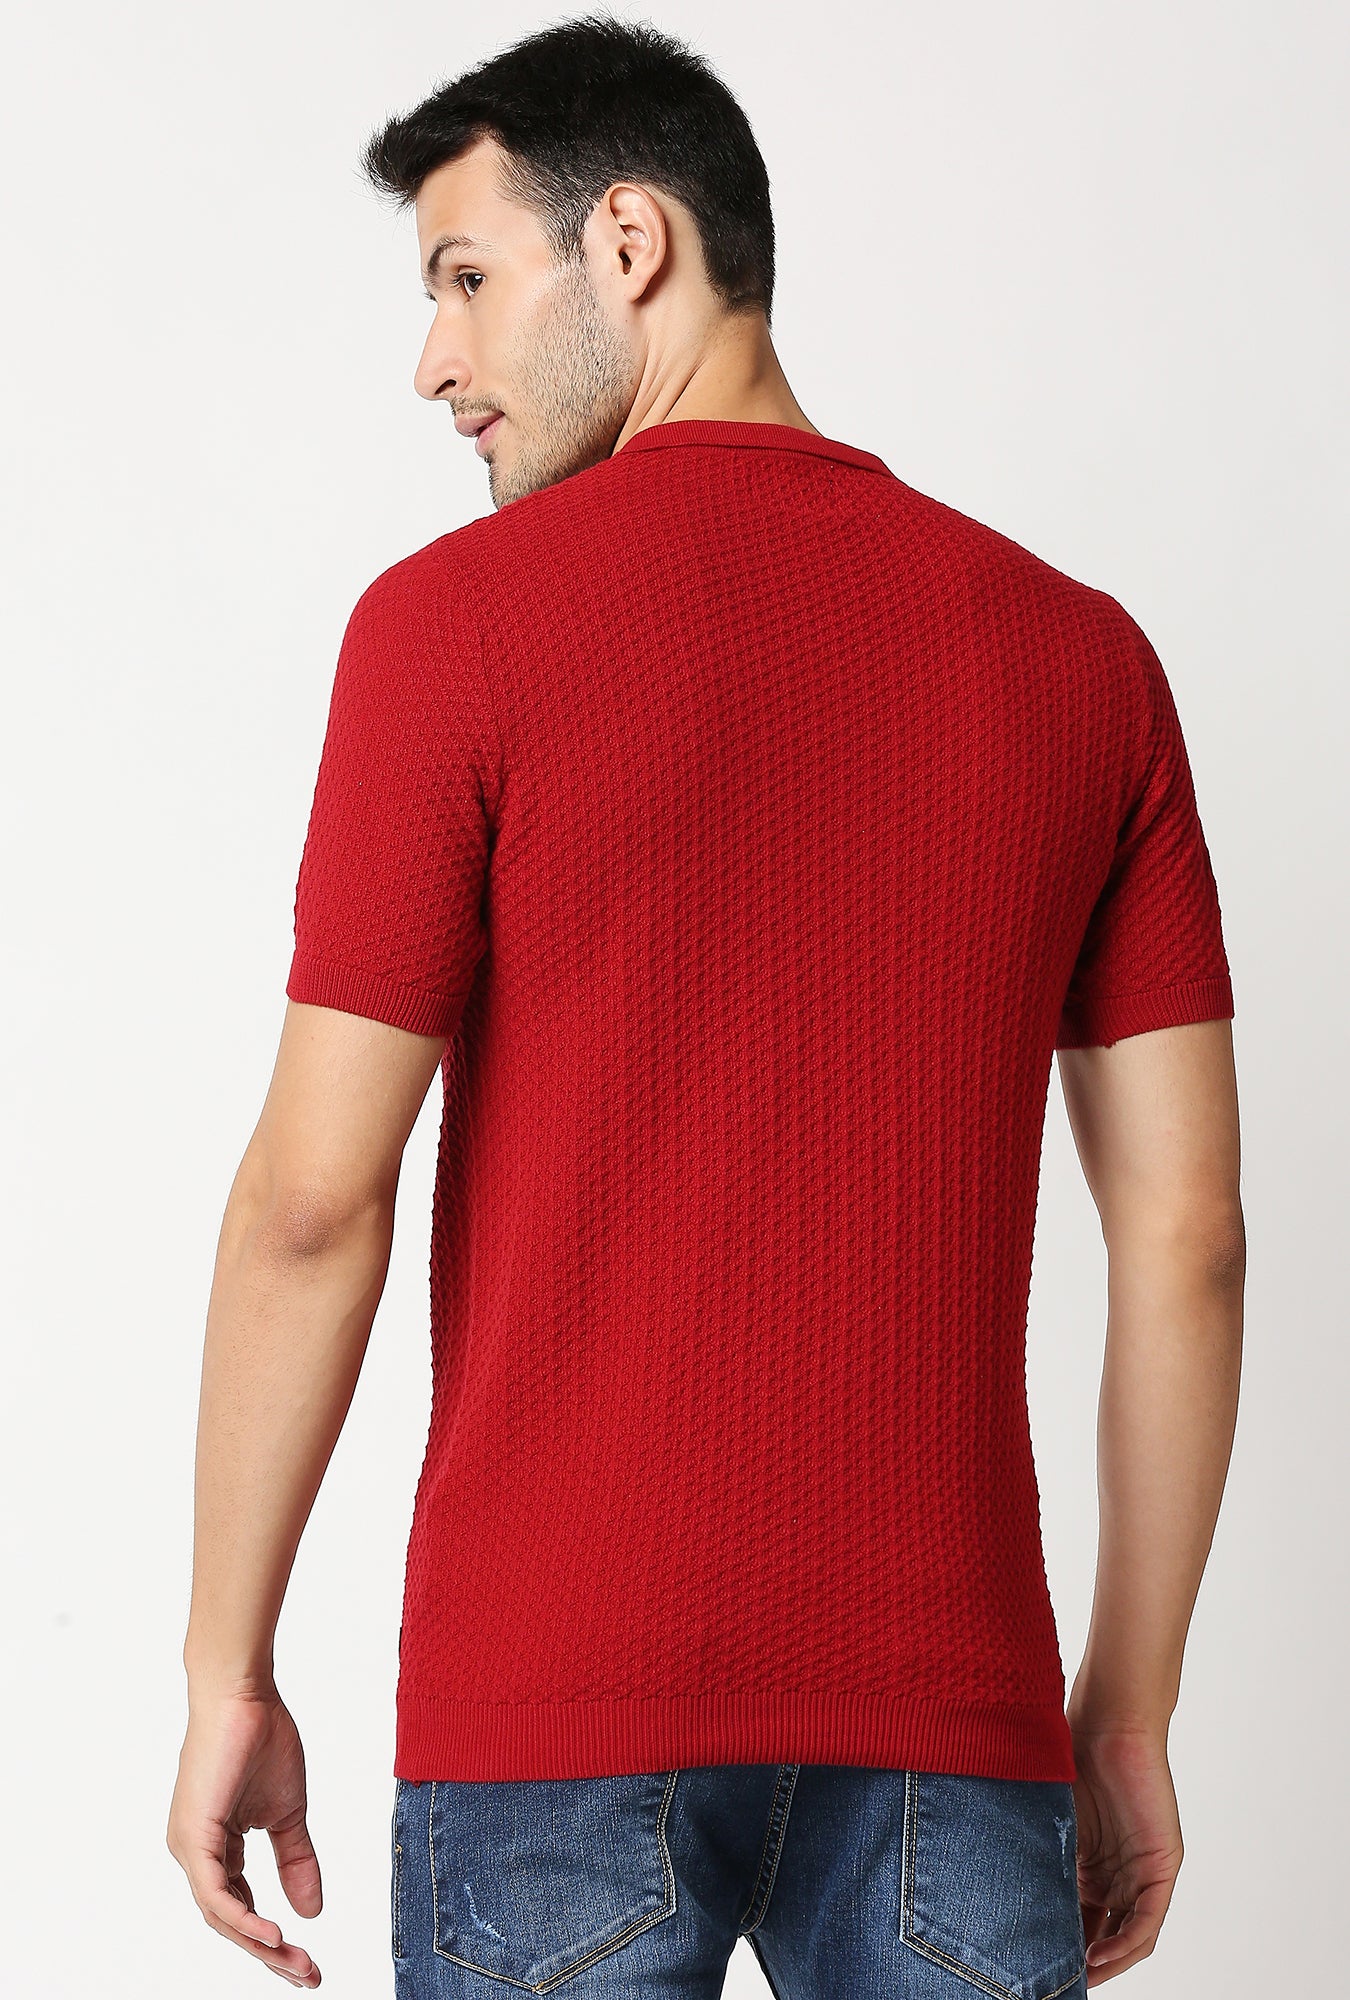 Fostino Beta Red Polo T-Shirt - Fostino - T-Shirts